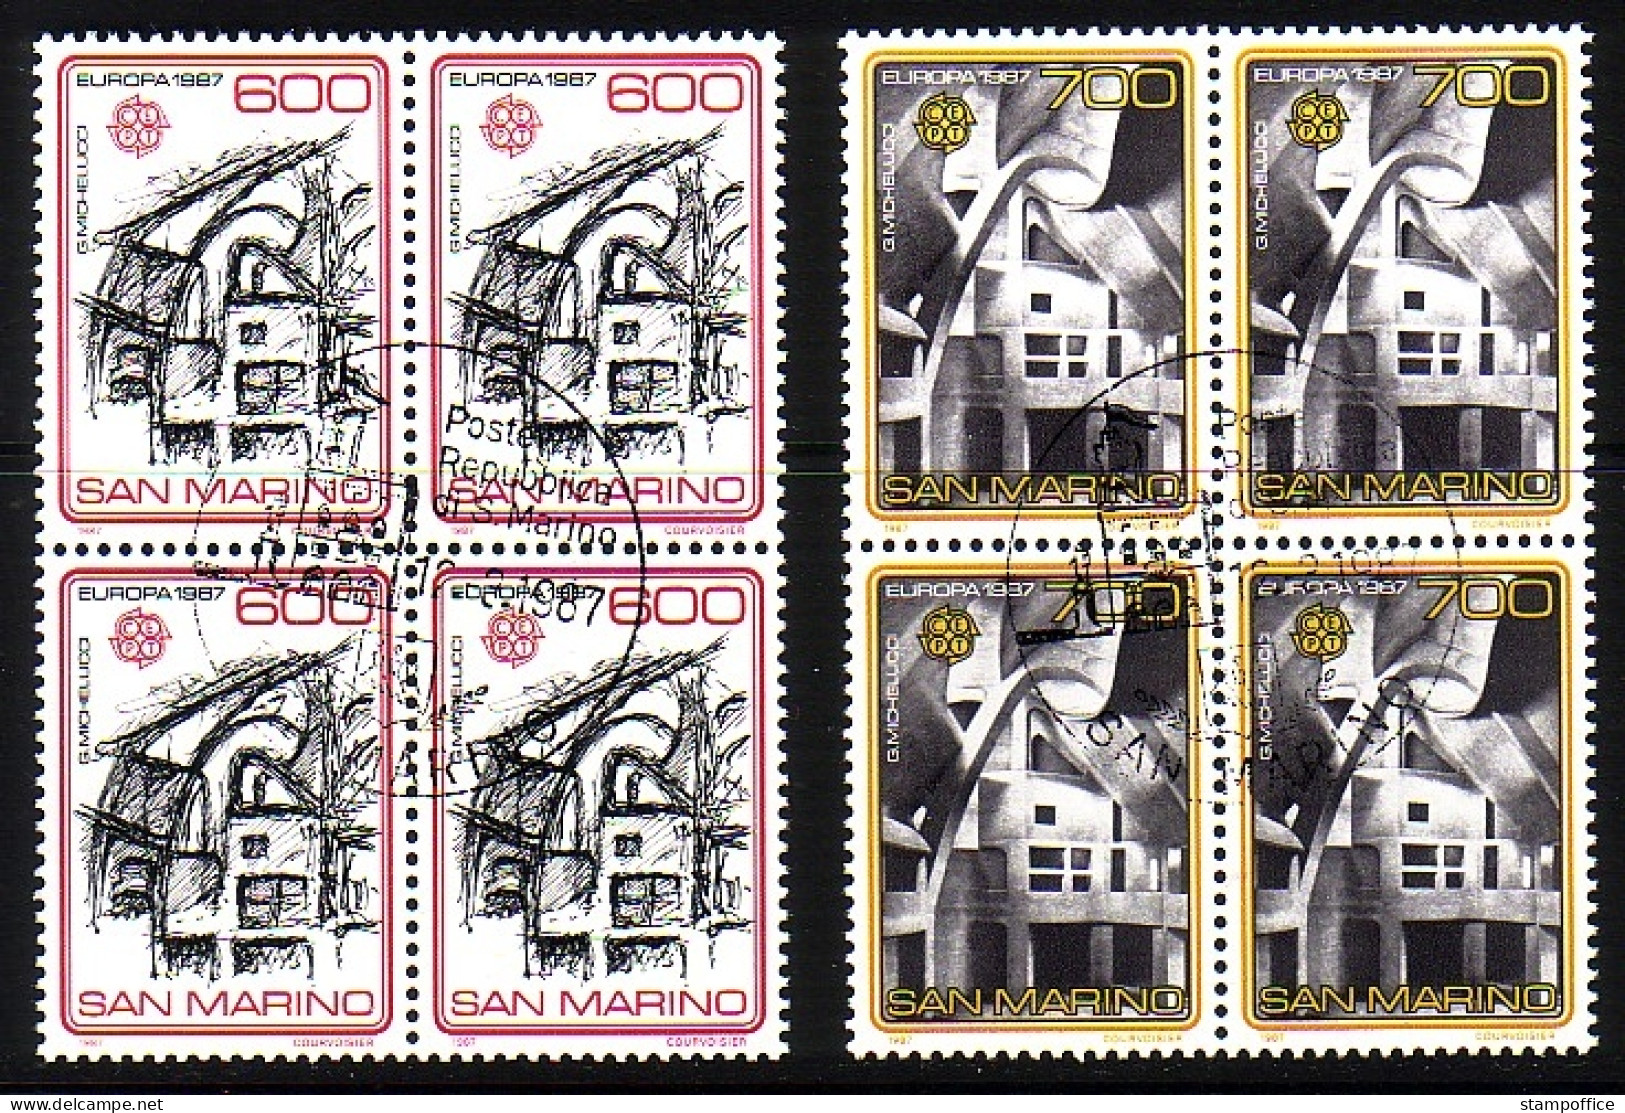 SAN MARINO MI-NR. 1354-1355 GESTEMPELT(USED) 4er BLOCK EUROPA 1987 - MODERNE ARCHITEKTUR KIRCHE - 1987